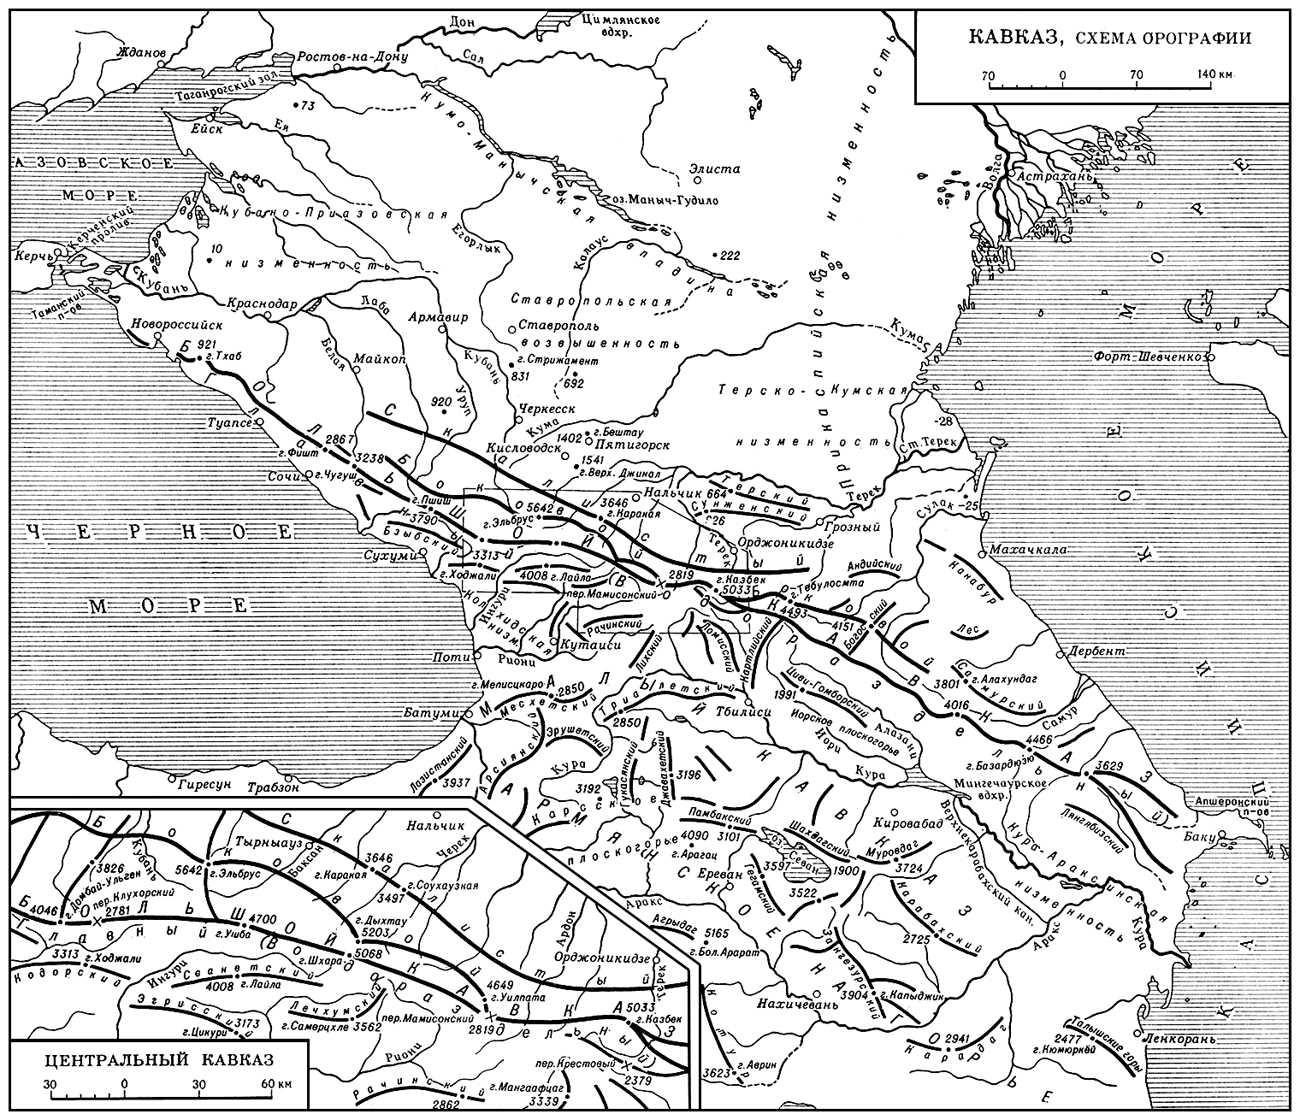 Кавказ. Схема орографии